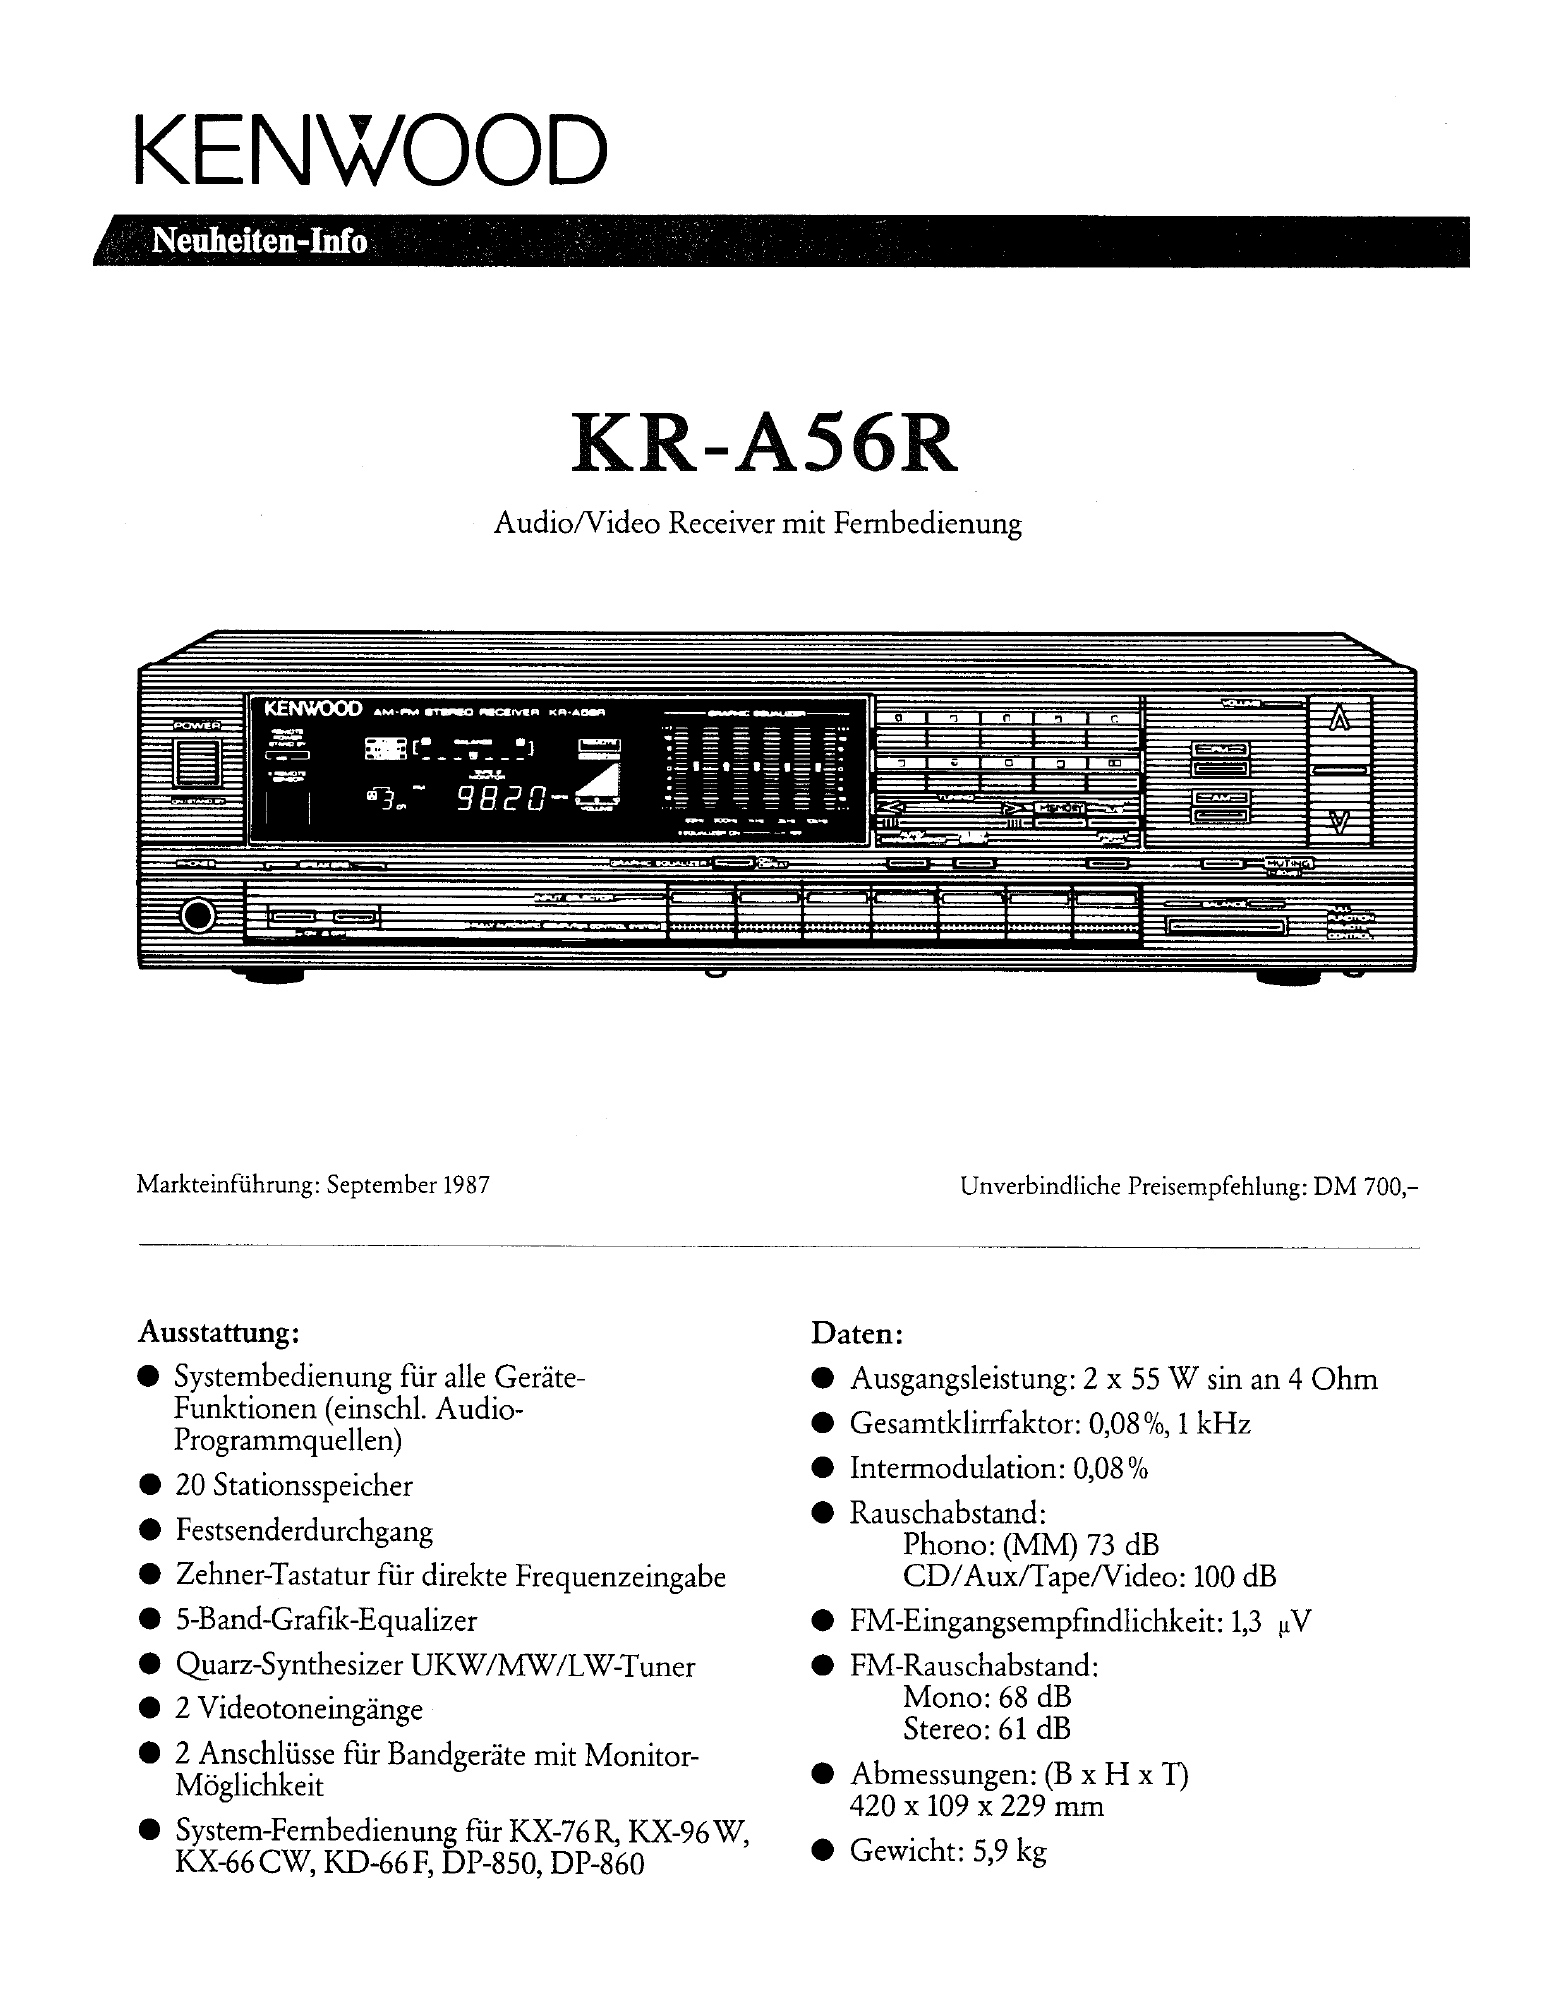 Kenwood KR-A 56 R-Prospekt-1987.jpg